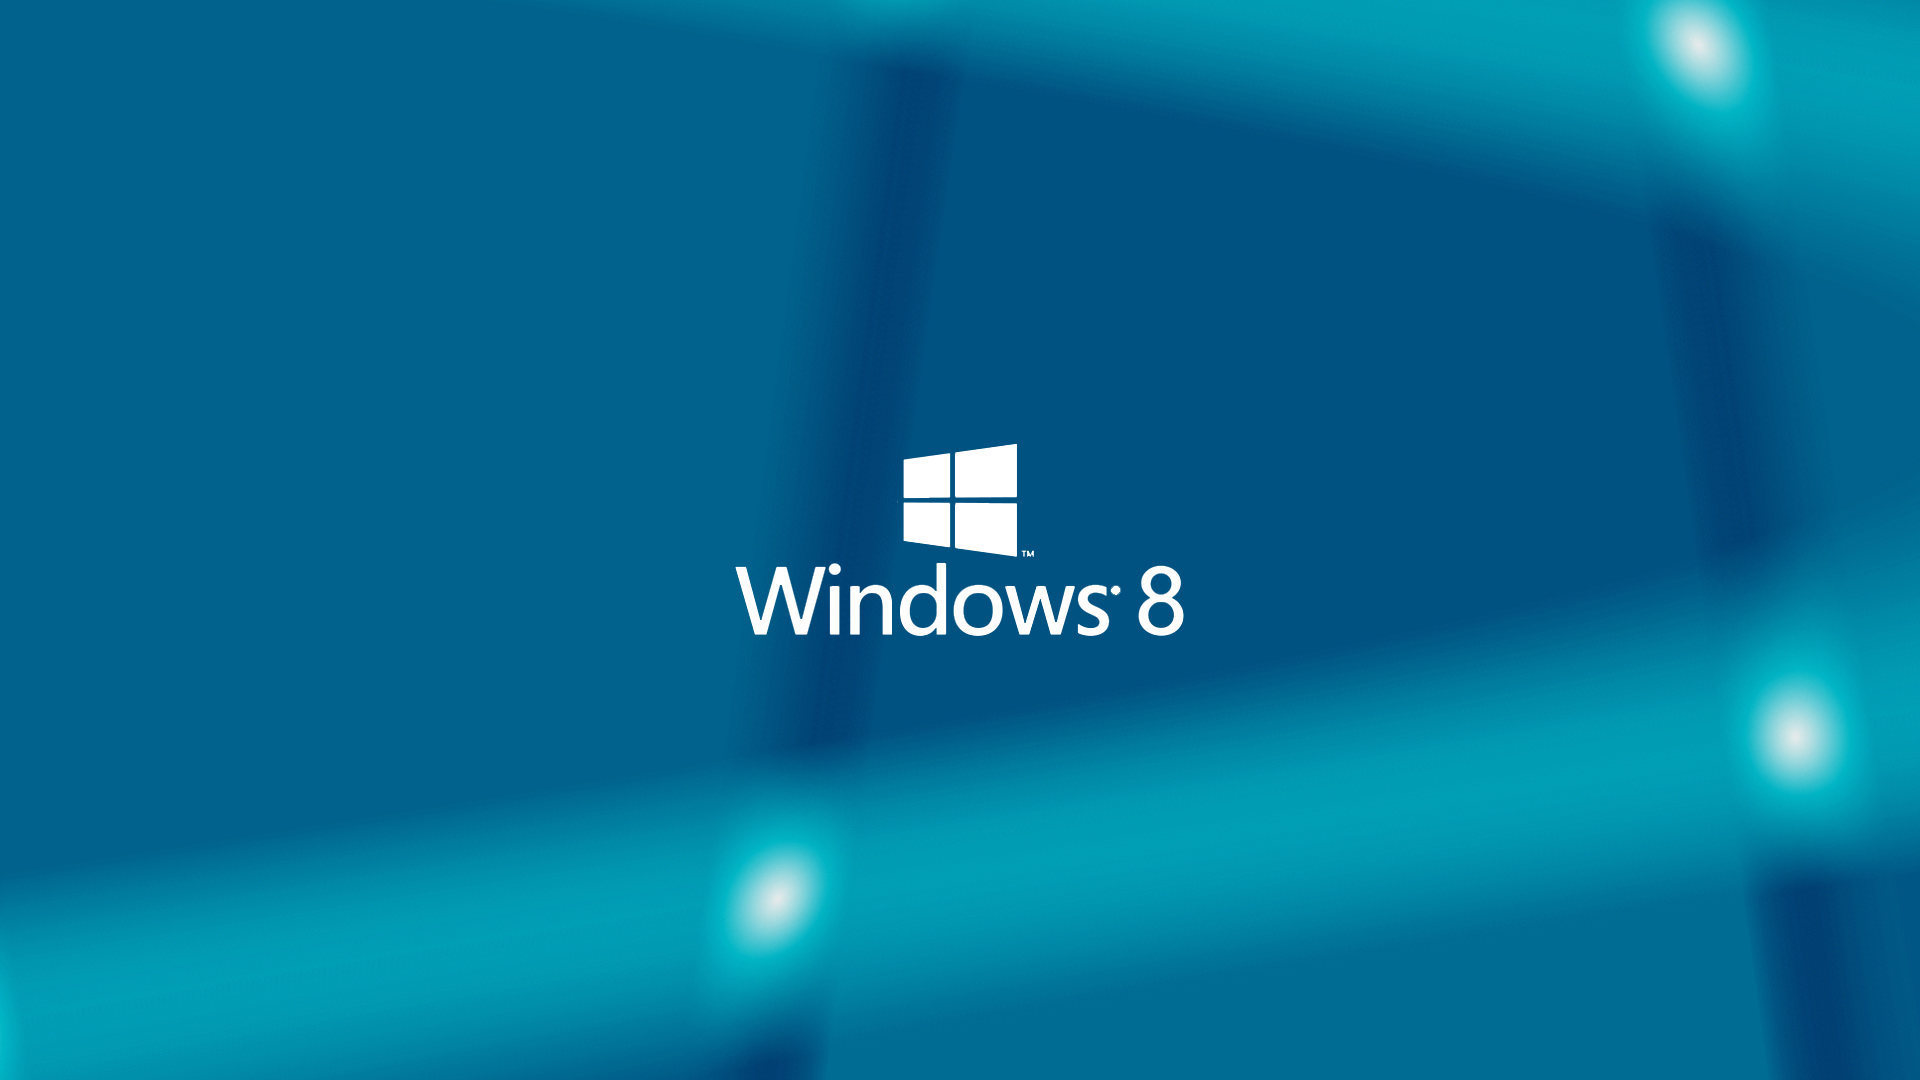 desktop background dashing background epic windows 8 theme windows 8 1920x1080